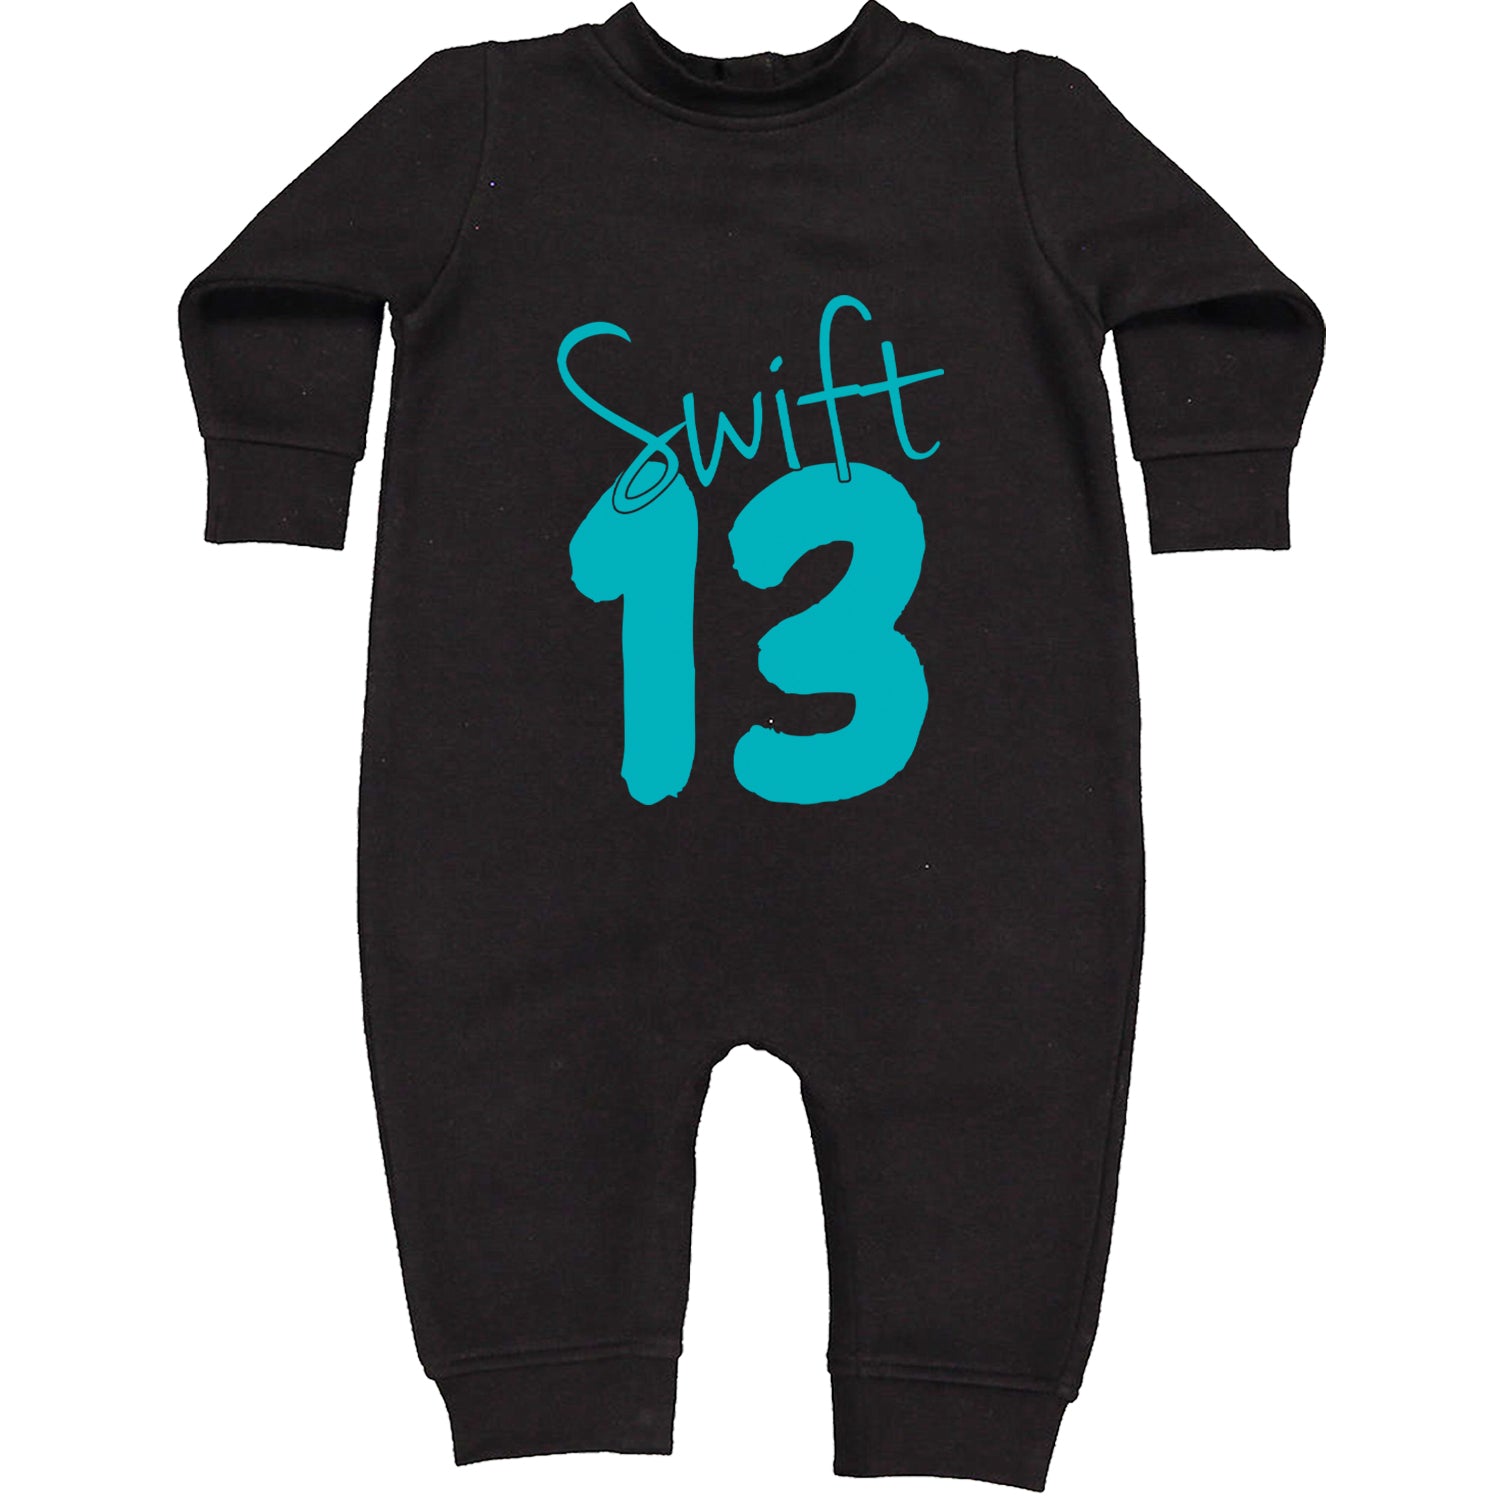 13 Swift 13 Lucky Number Era TTPD Toddler Hoodie And Infant Fleece Romper Black